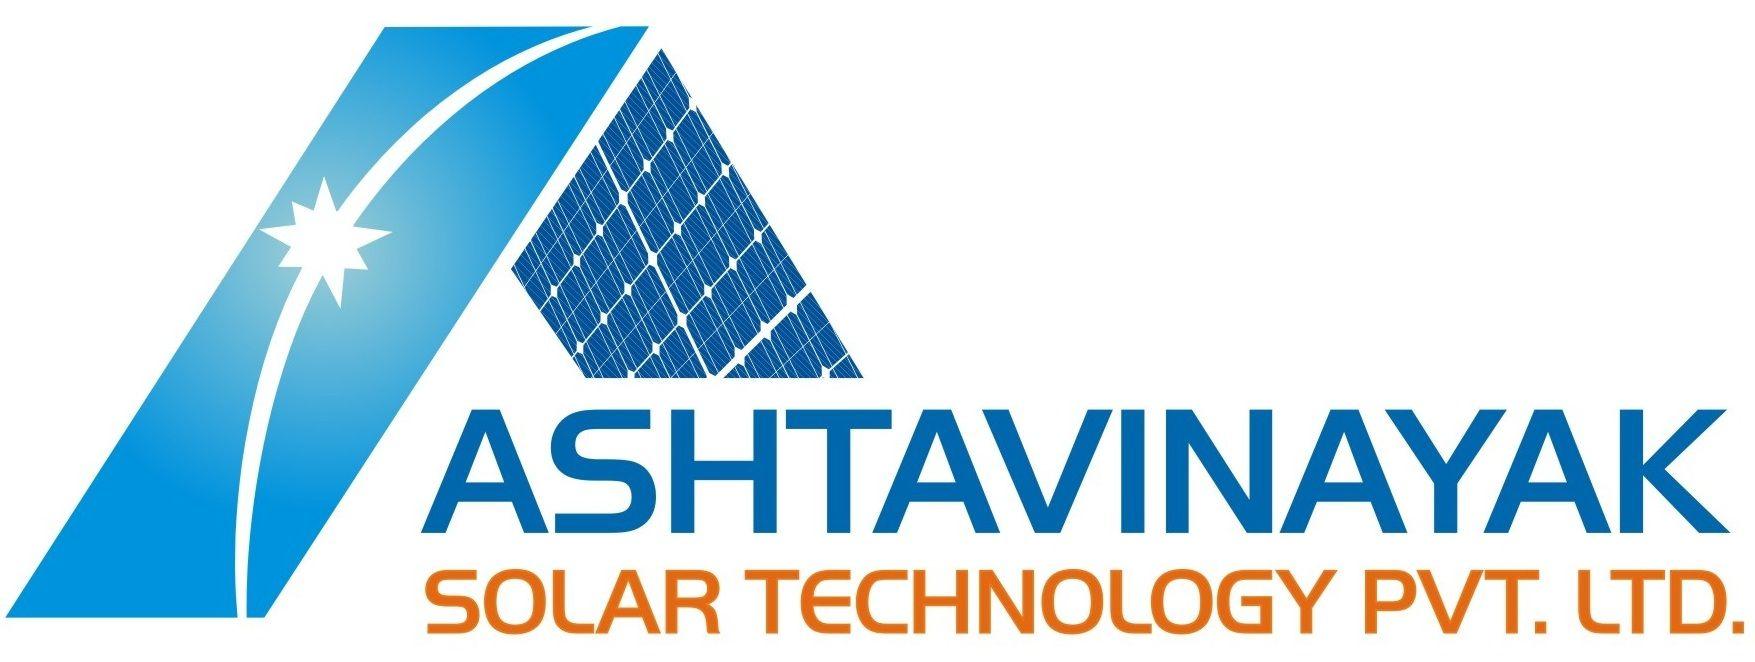 Photovoltaic Logo - Ashtavinayak Solar Technology Pvt. Ltd.